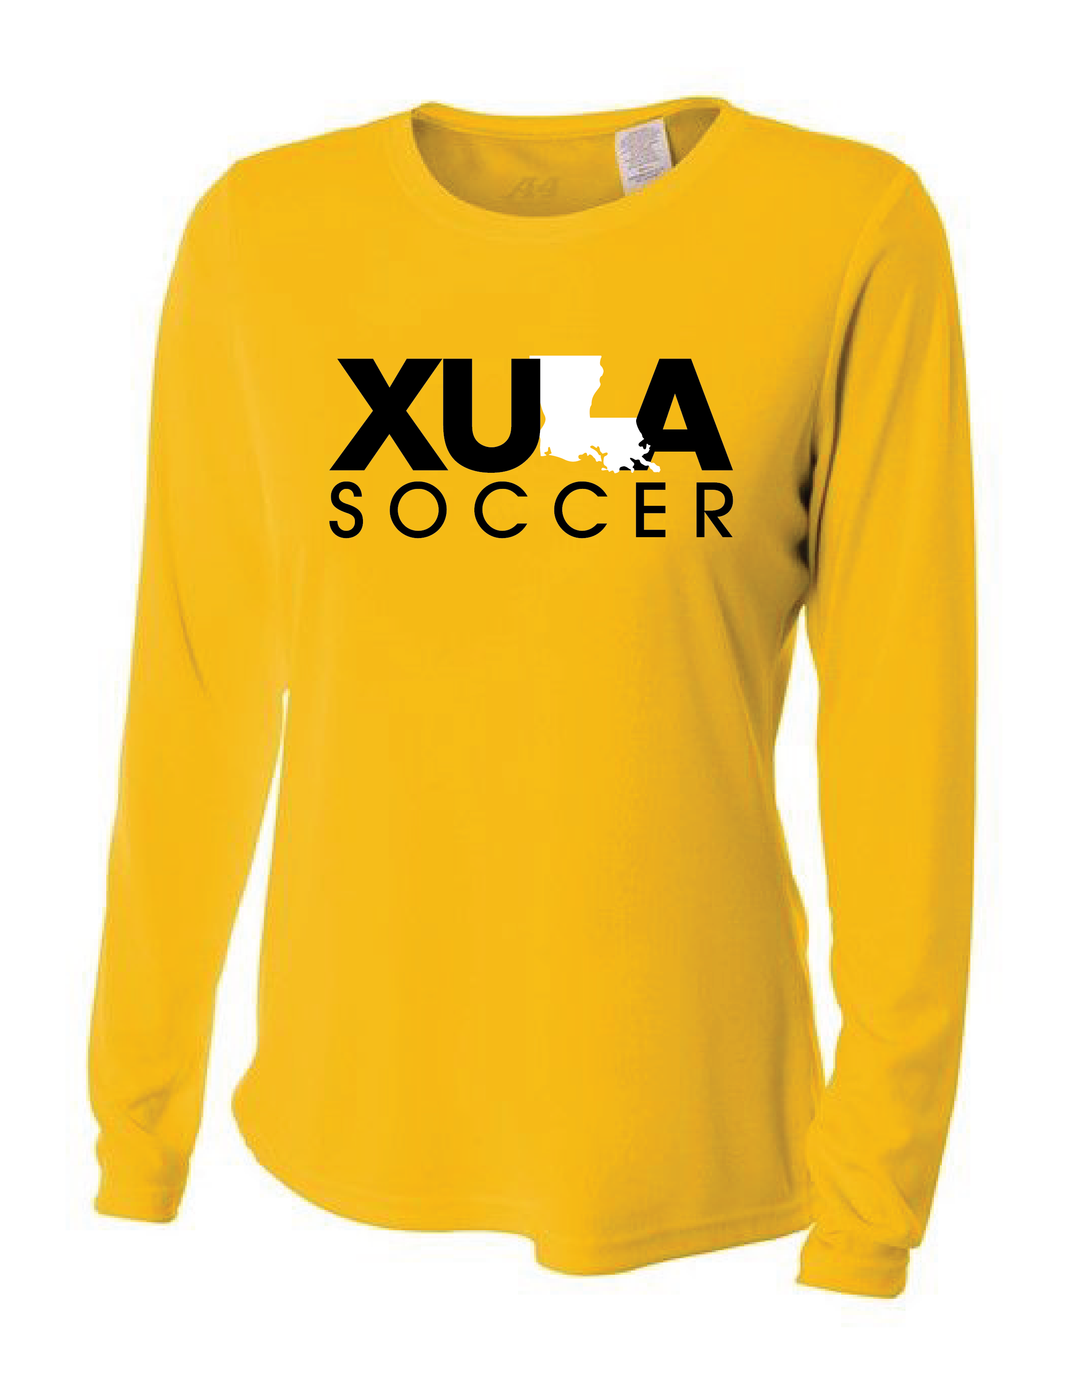 XULA Soccer Long-Sleeve Performance Shirt Xavier University Gold Womens Small - Third Coast Soccer